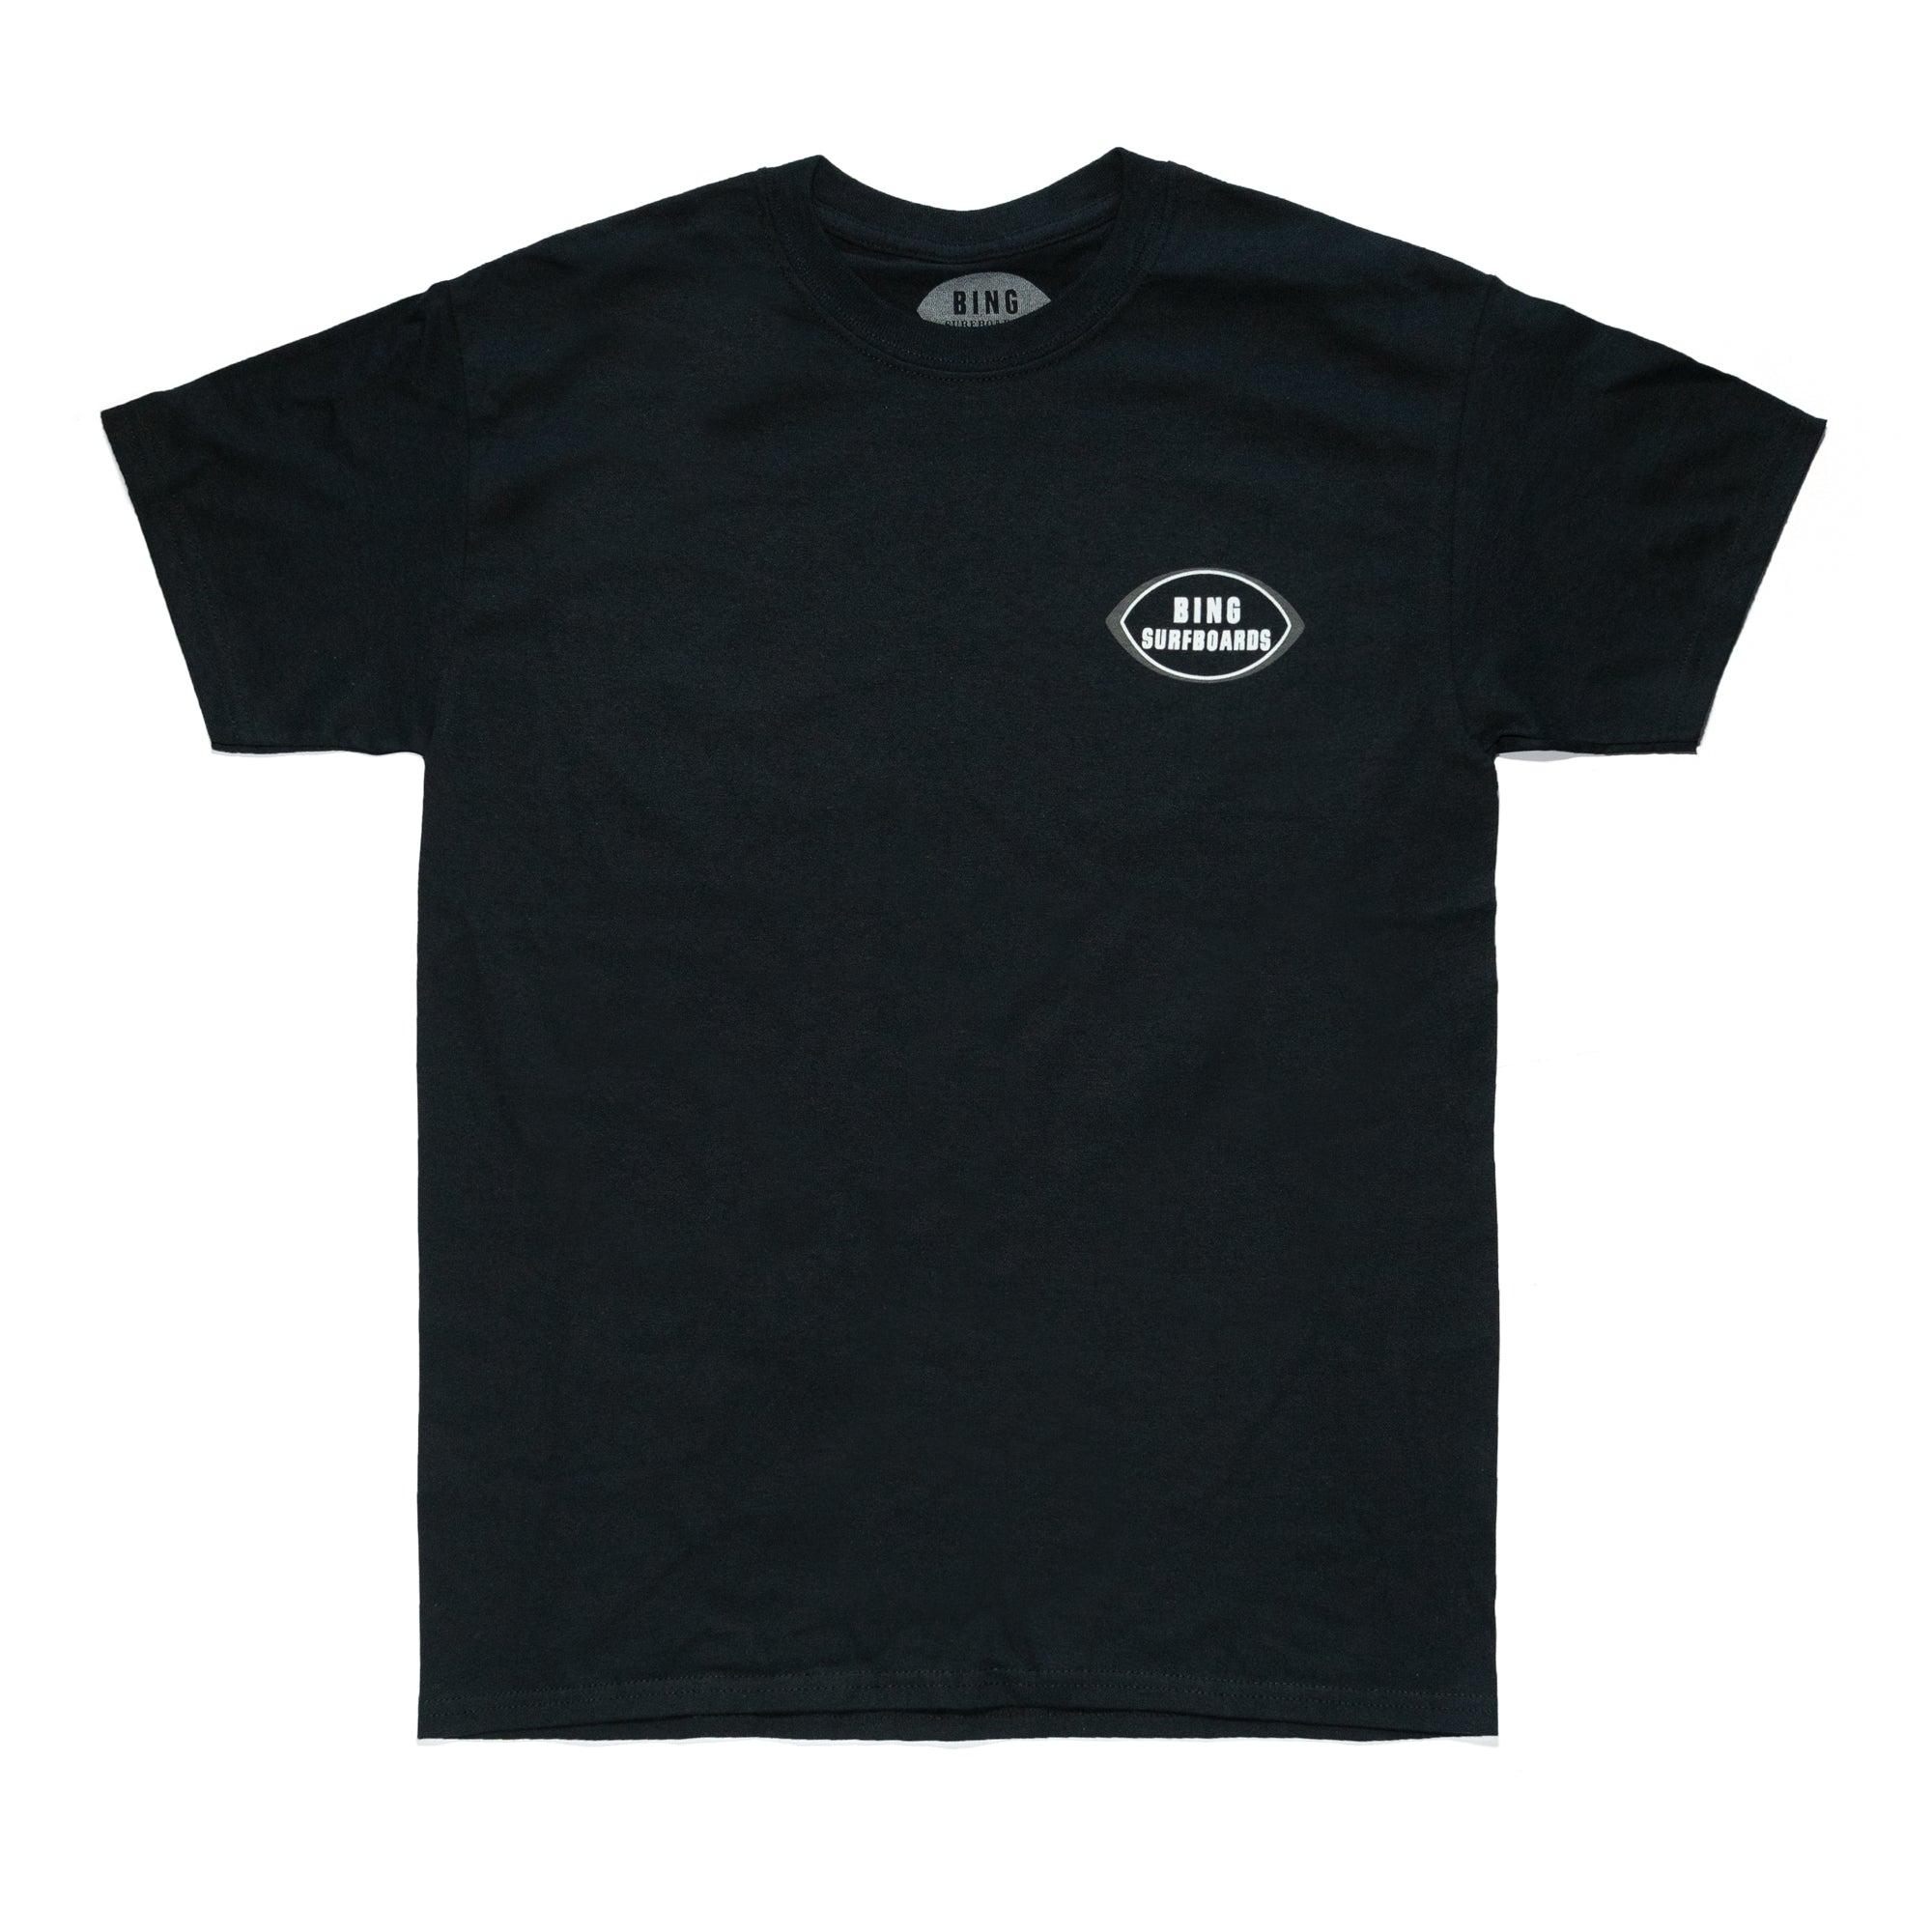 SILVER SPOON Classic S/S T-Shirt - Black